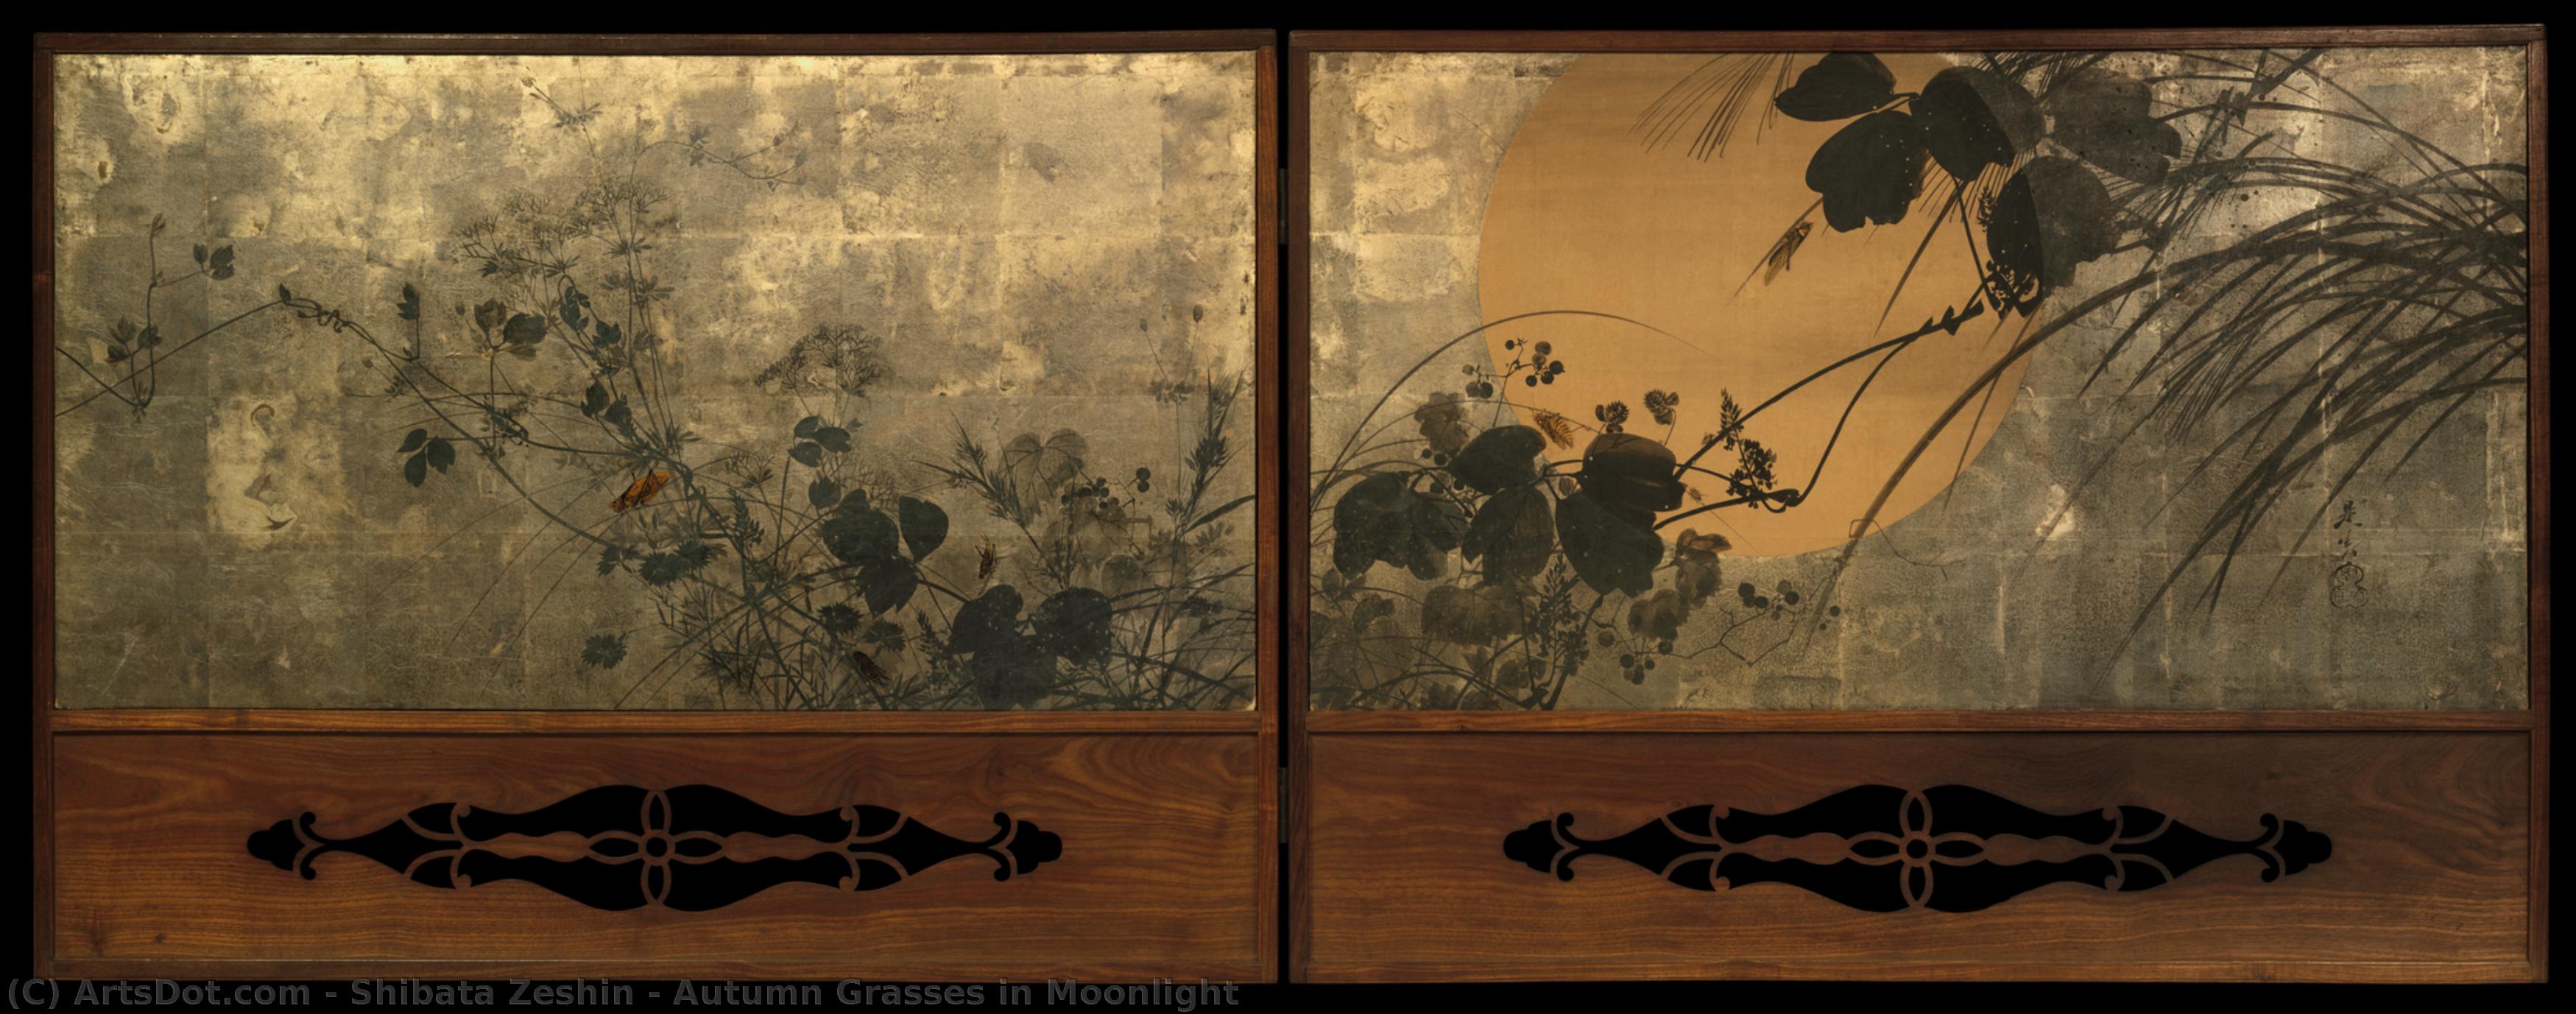  Paintings Reproductions Autumn Grasses in Moonlight, 801 by Shibata Zeshin (1807-1891) | ArtsDot.com